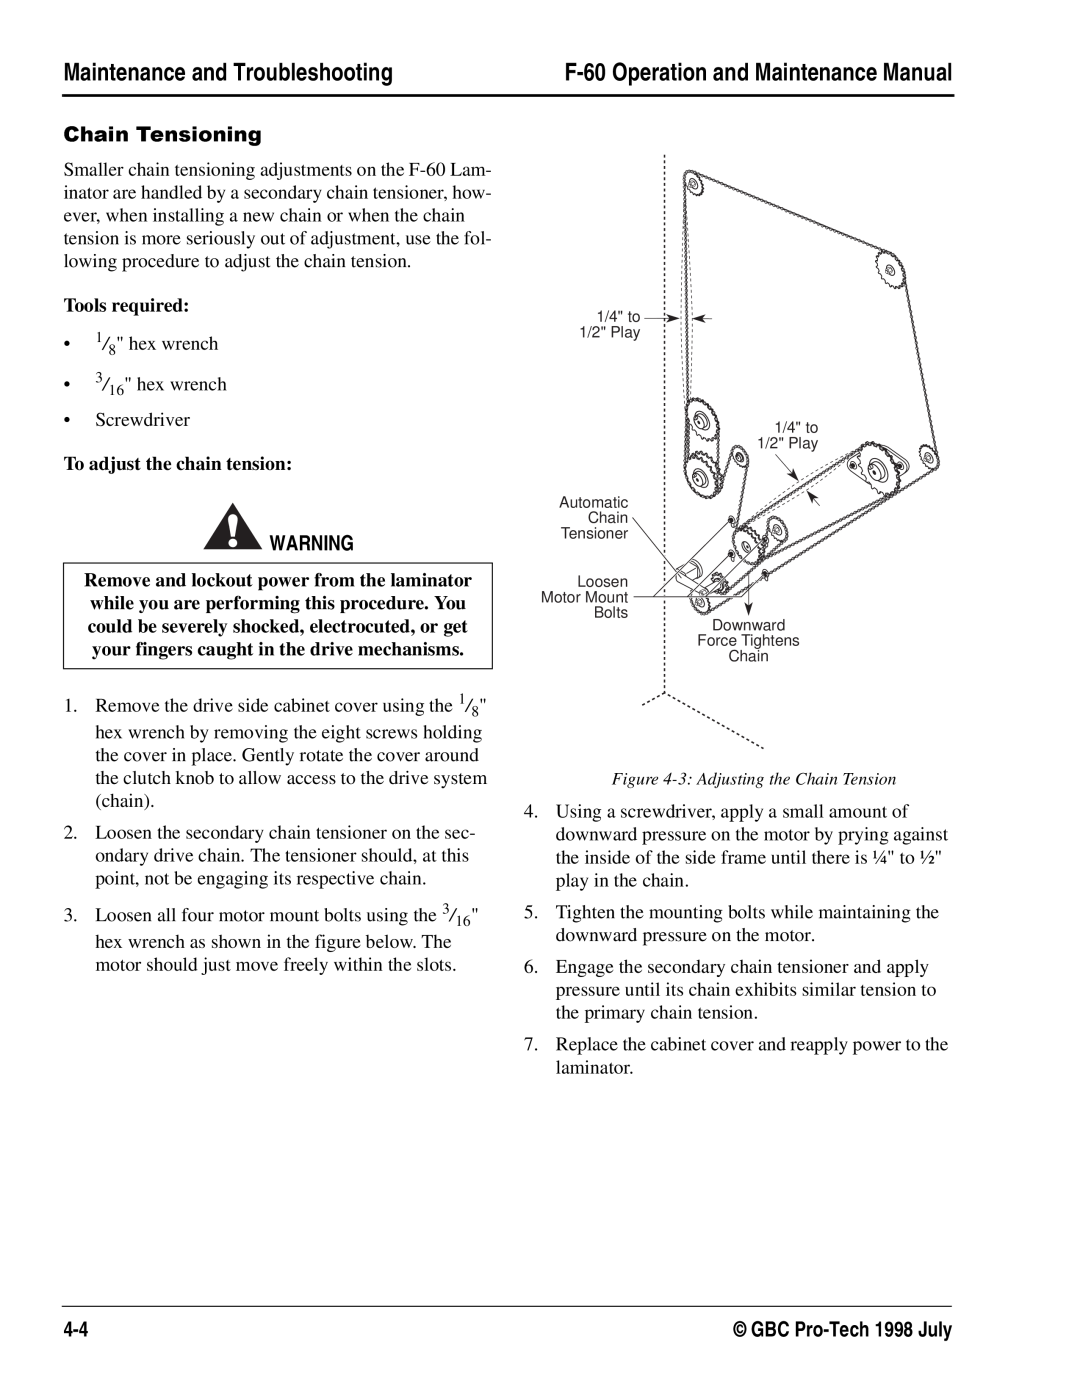 GBC Laminator manual KDLQ7HQVLRQLQJ, Maintenance and Troubleshooting, F-60 Operation and Maintenance Manual 